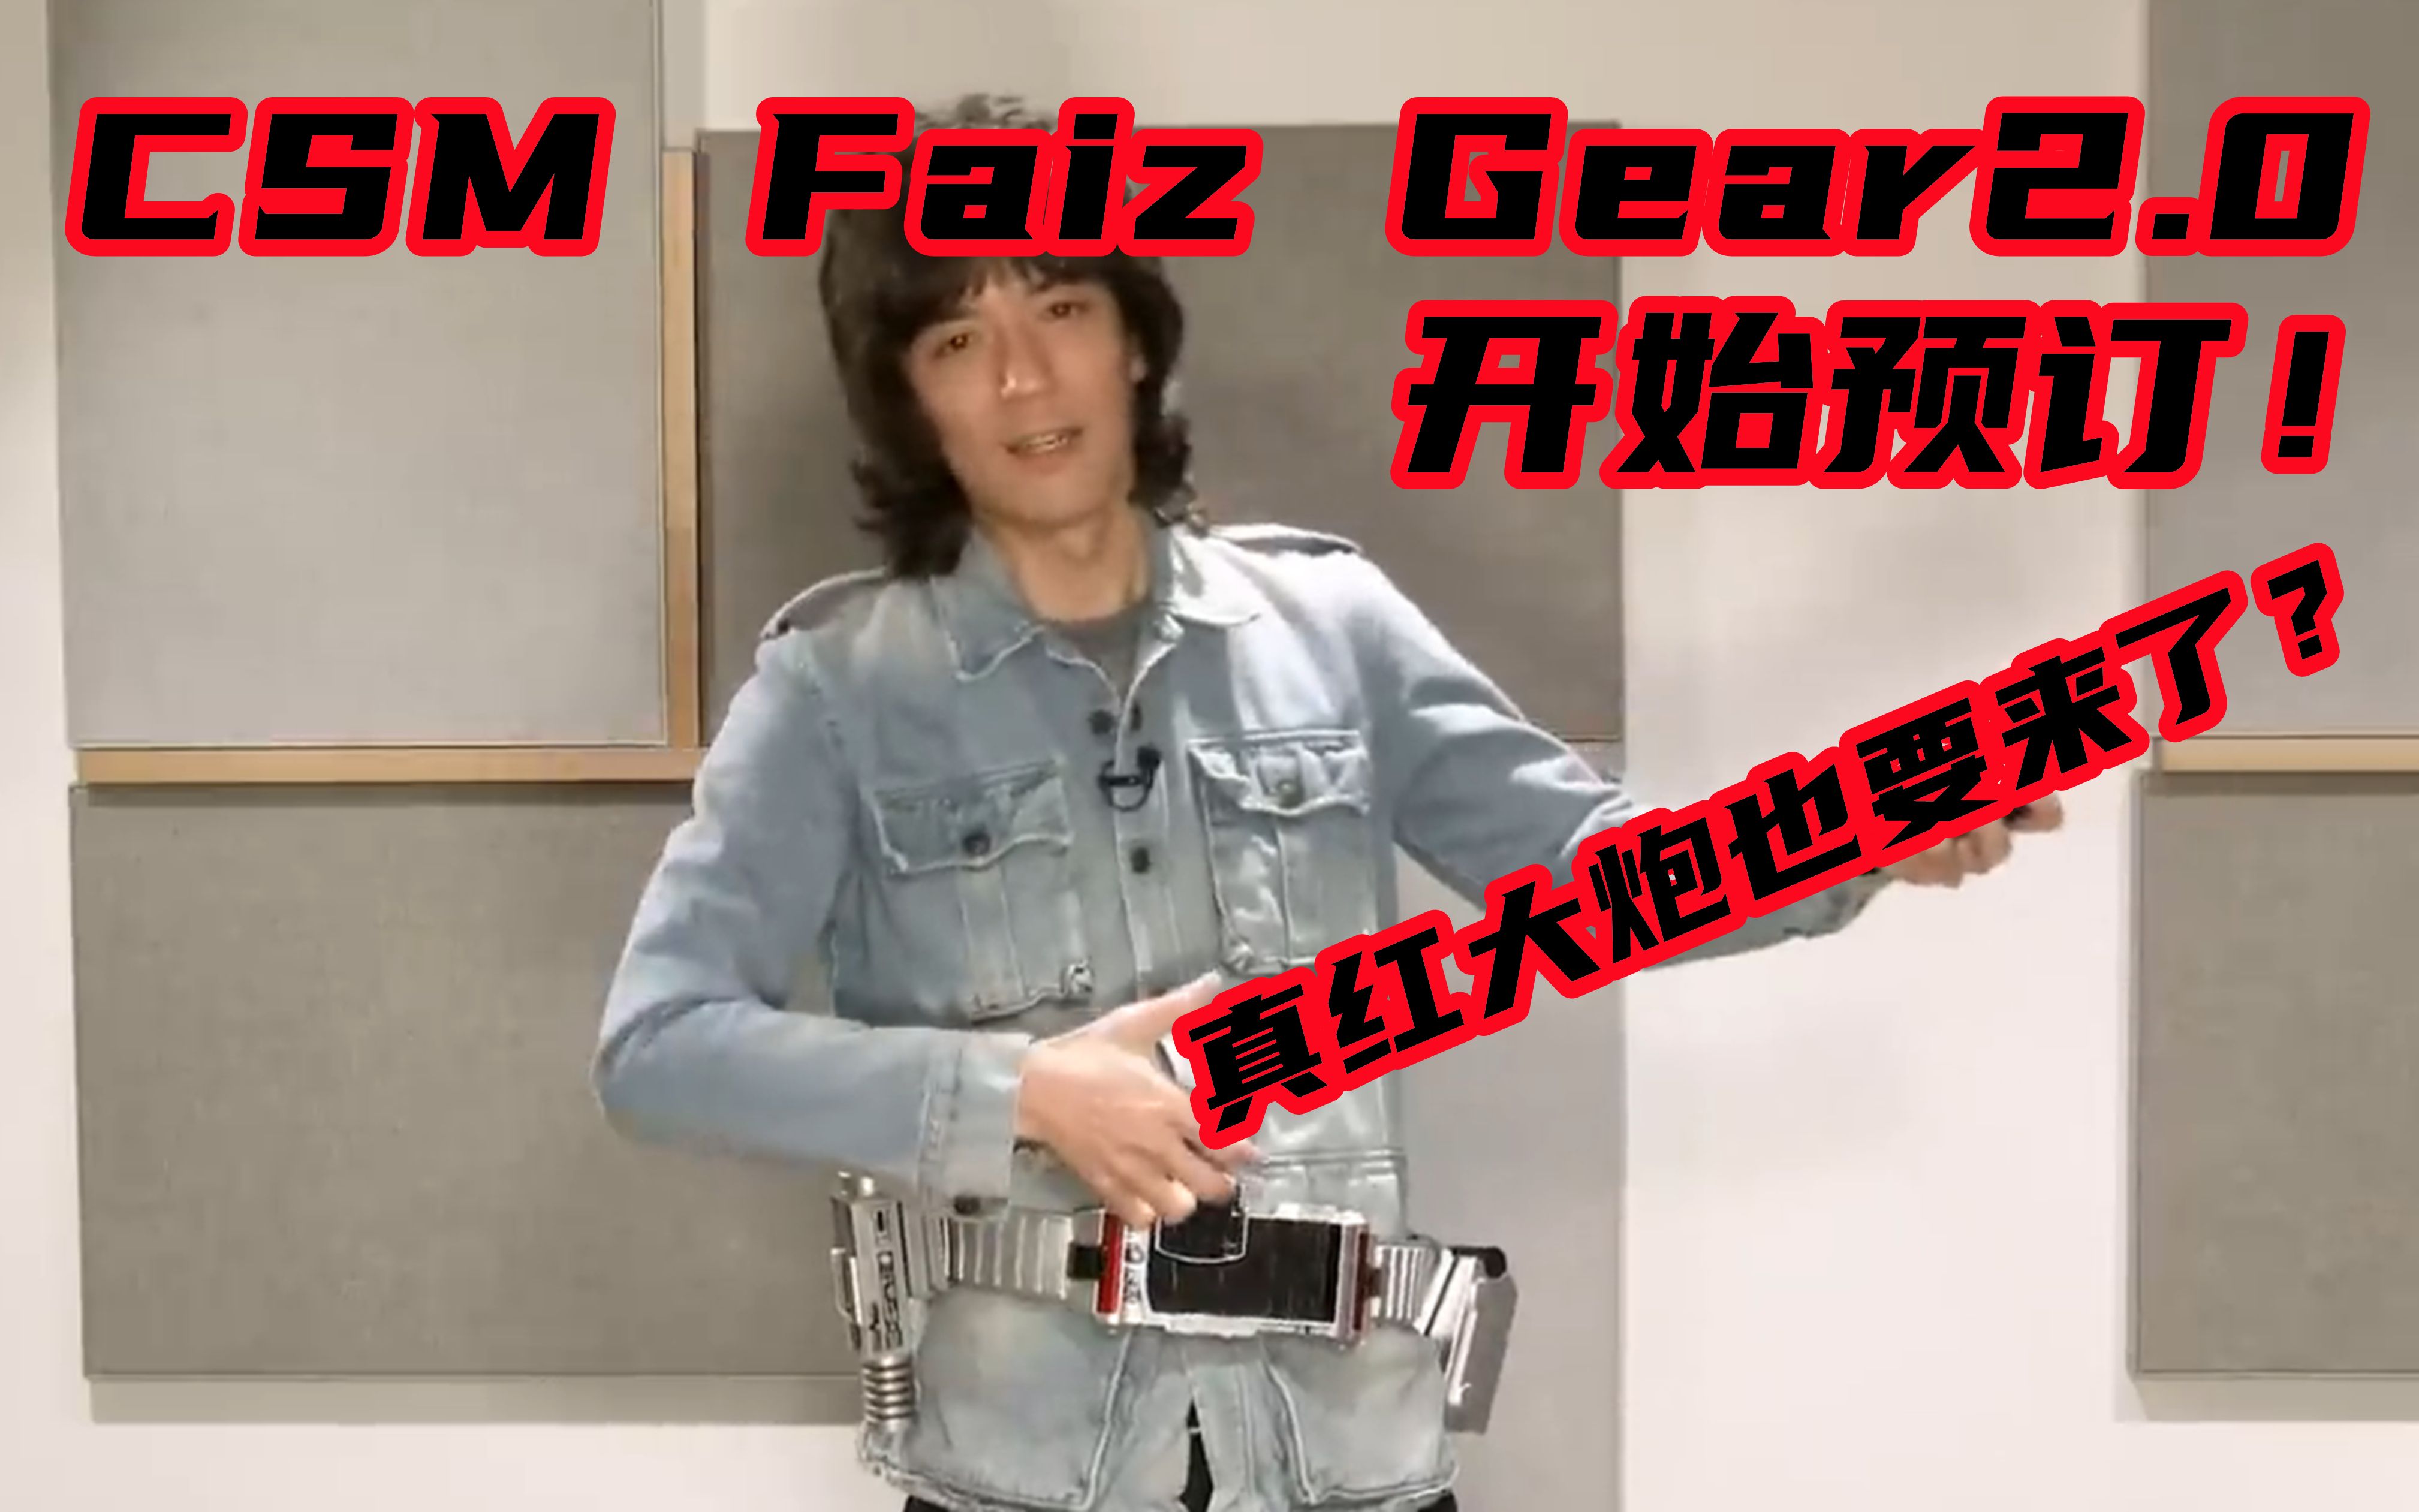 CSM Faiz Gear&加速手表 2.0 开始预订！各种新规升级！官方收纳箱终于要来了！还有后续商品展开？【味增和你说】